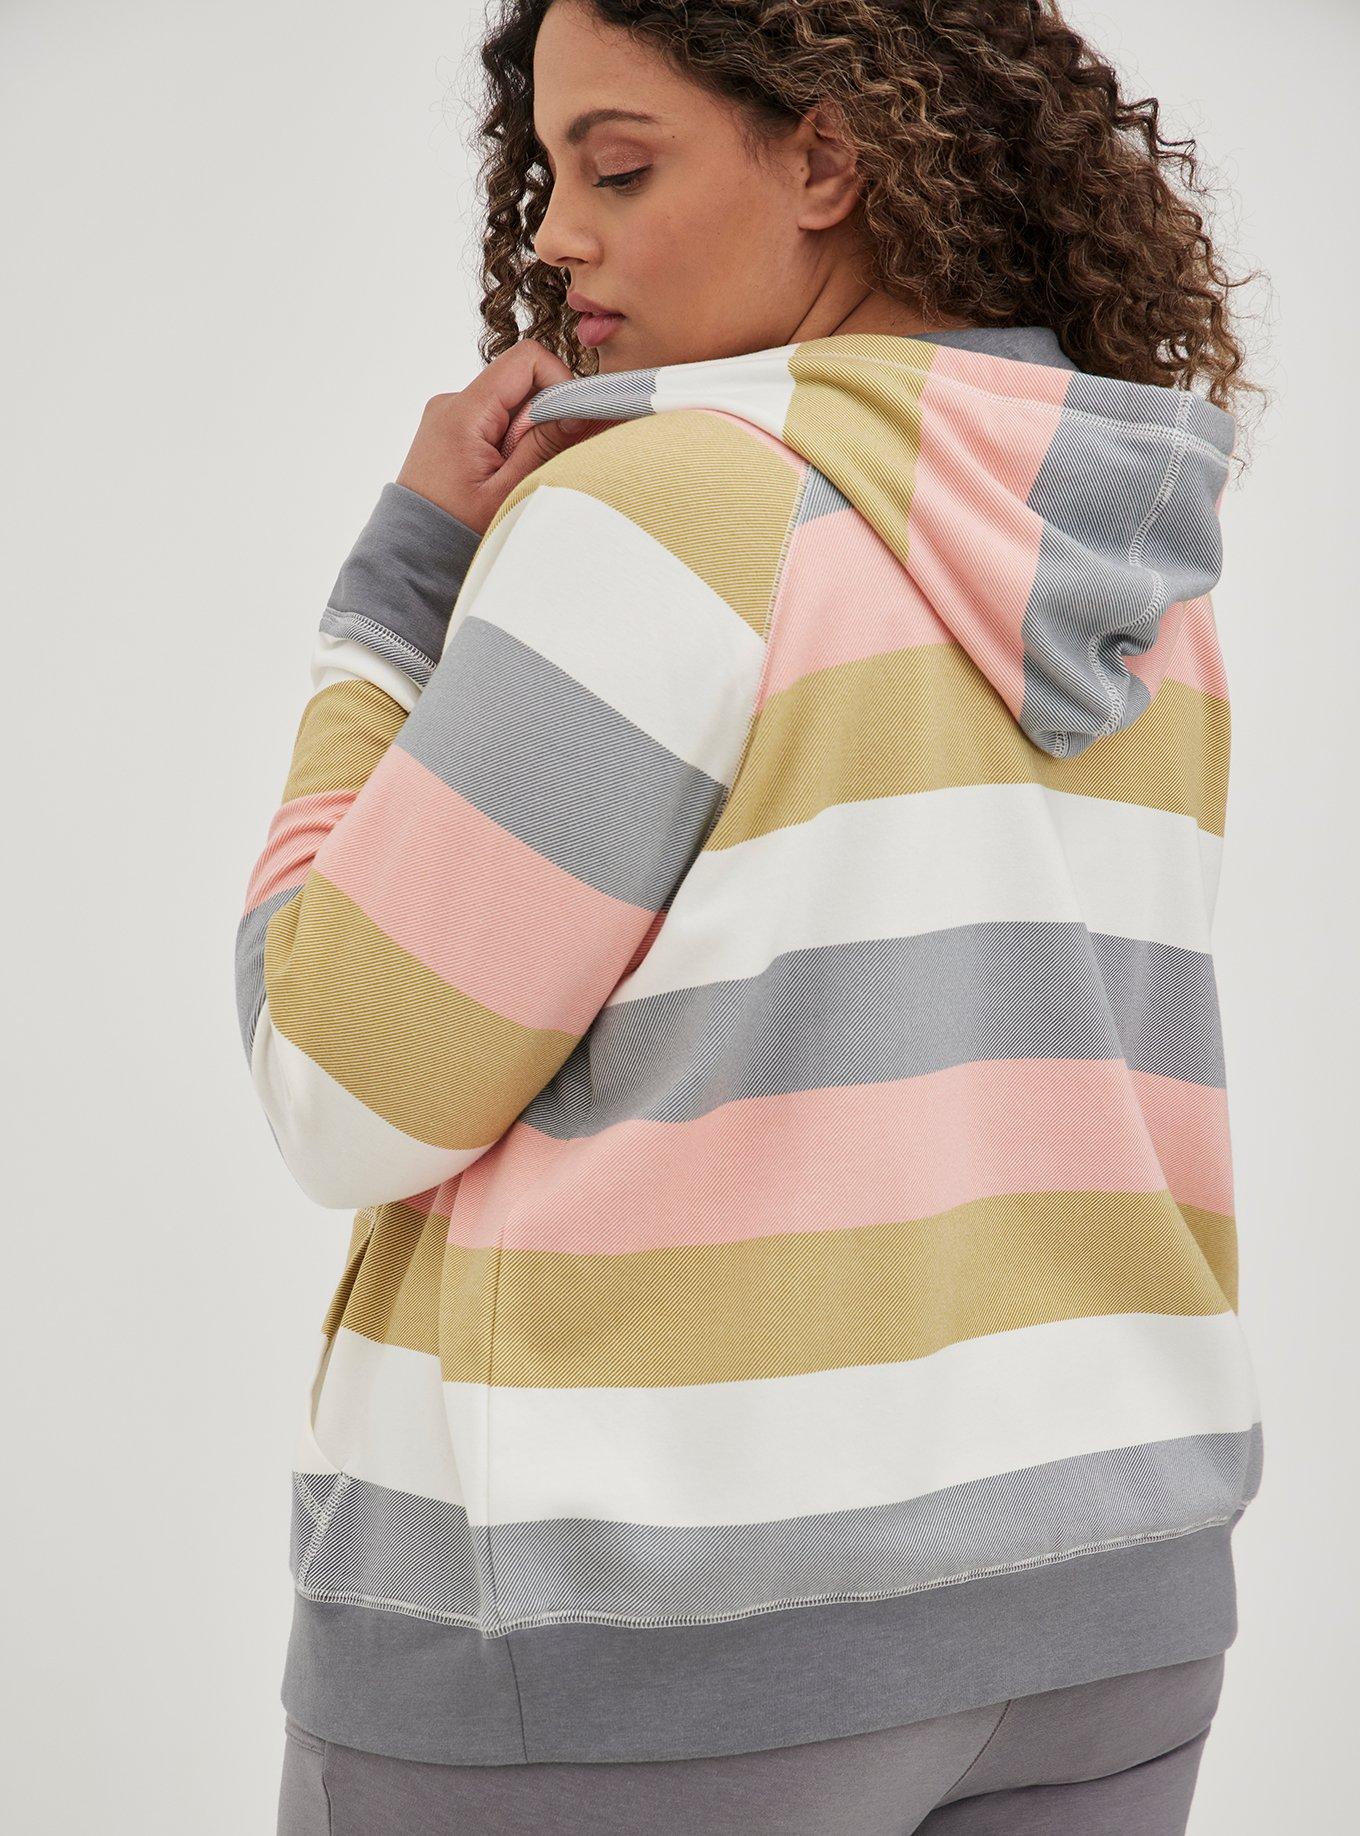 Plus Size - Zip Hoodie - Super Soft Fleece Multi Stripe - Torrid